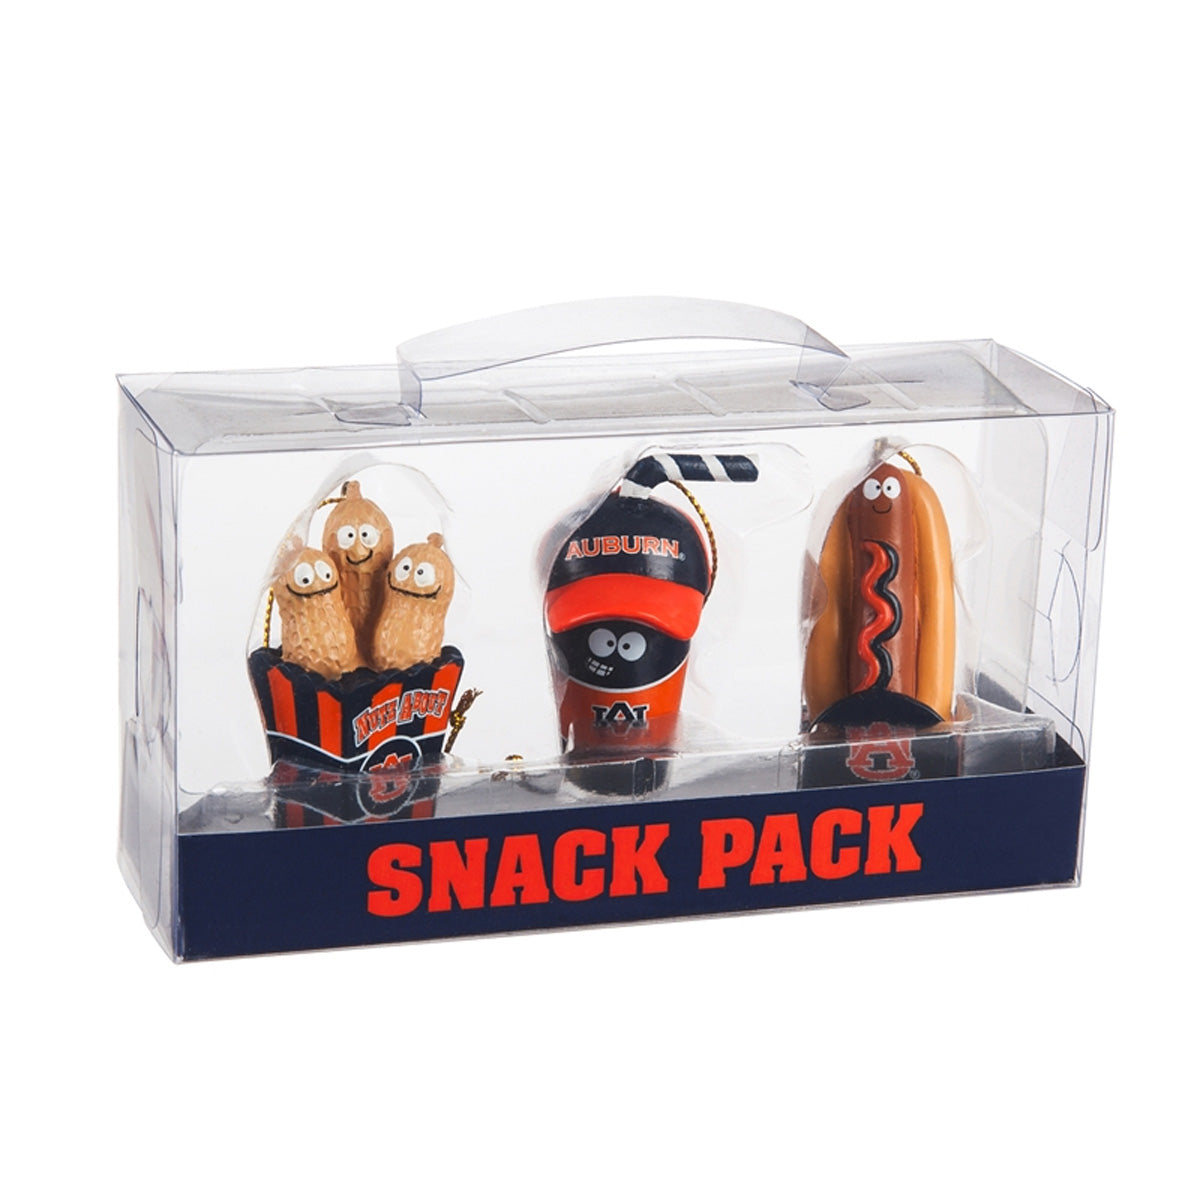 Auburn University, Snack Pack Ornaments, set of 3